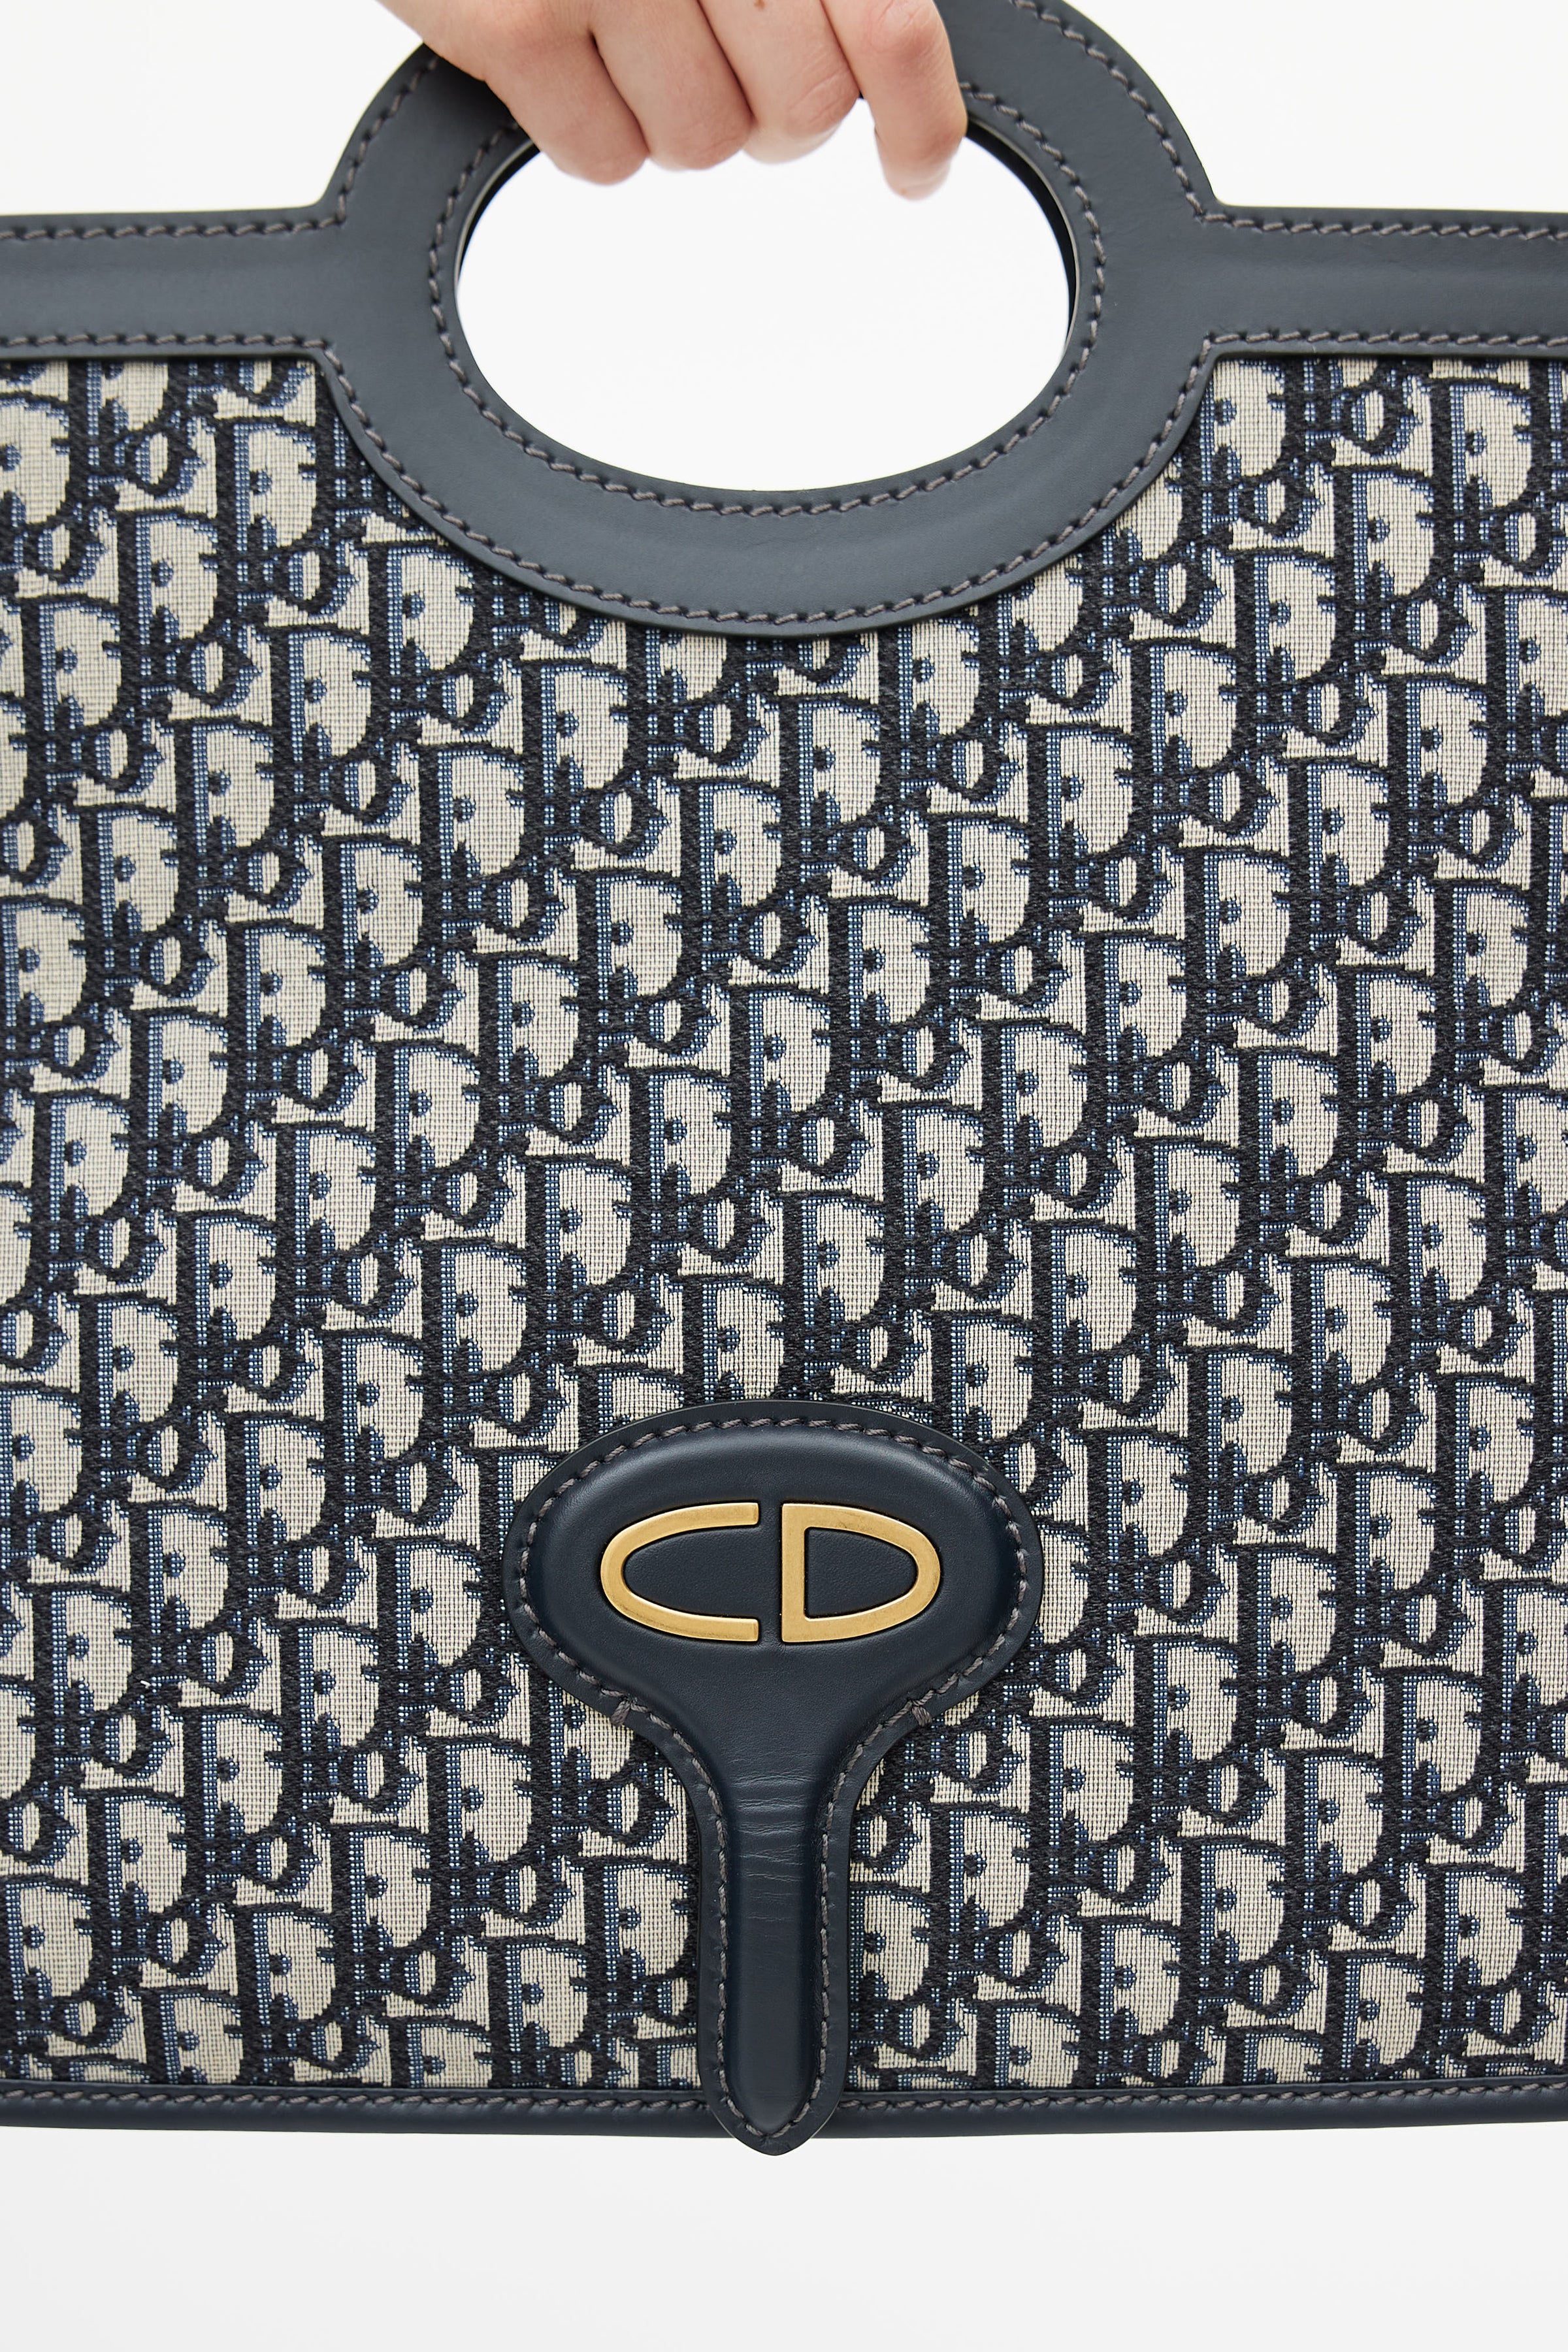 Dior Oblique Clutch, Dior Handbags